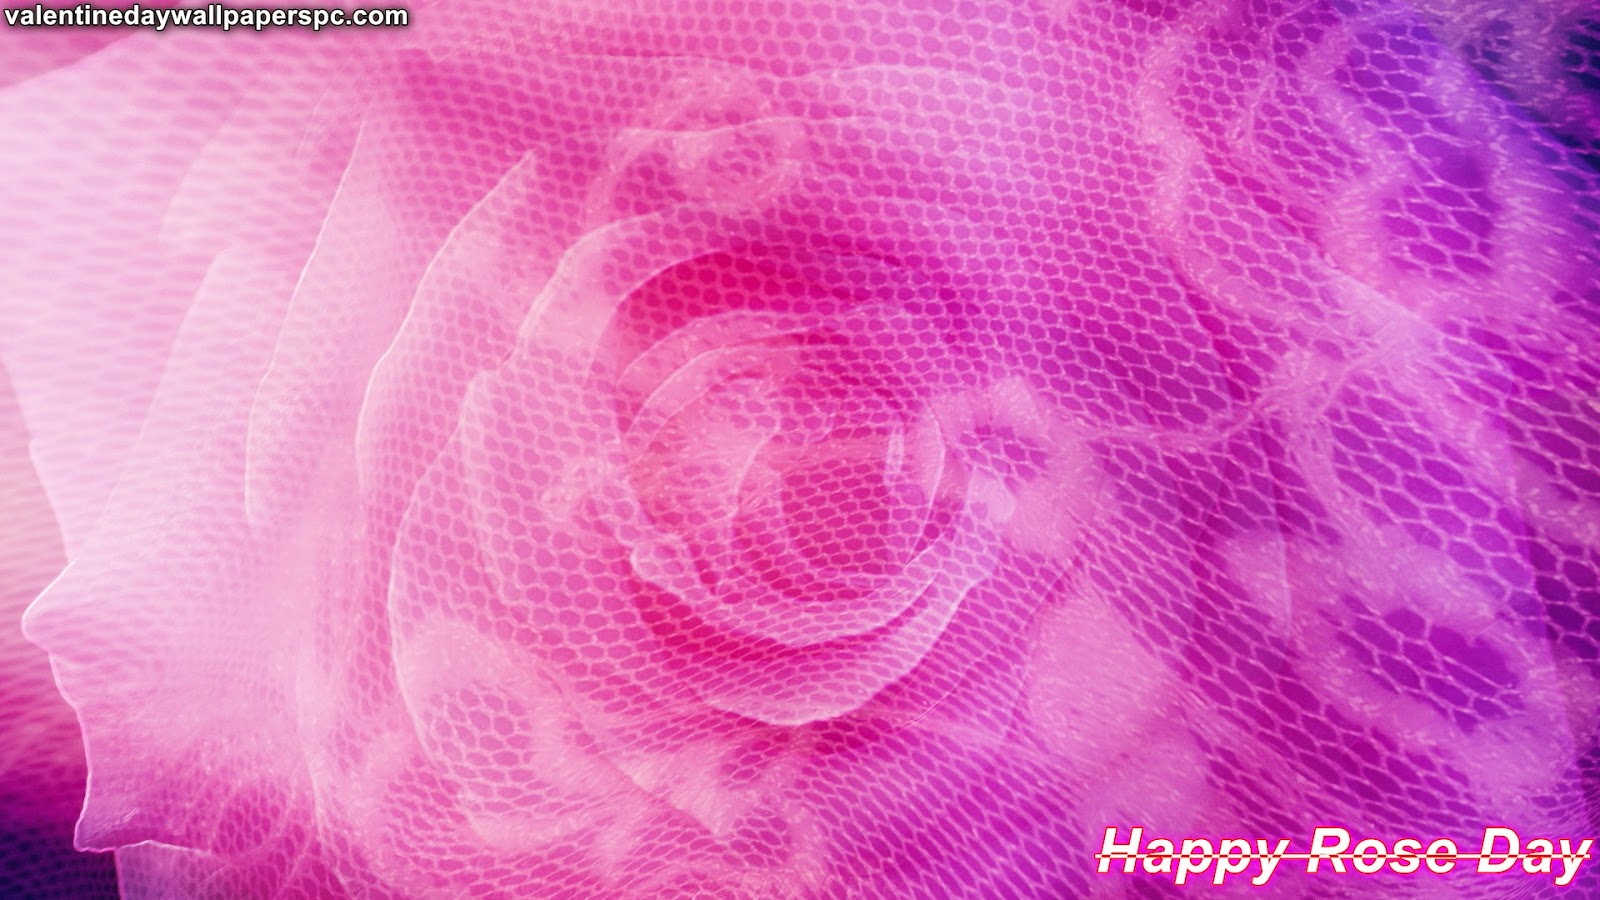 Happy Rose Day Wallpaper Valentine S